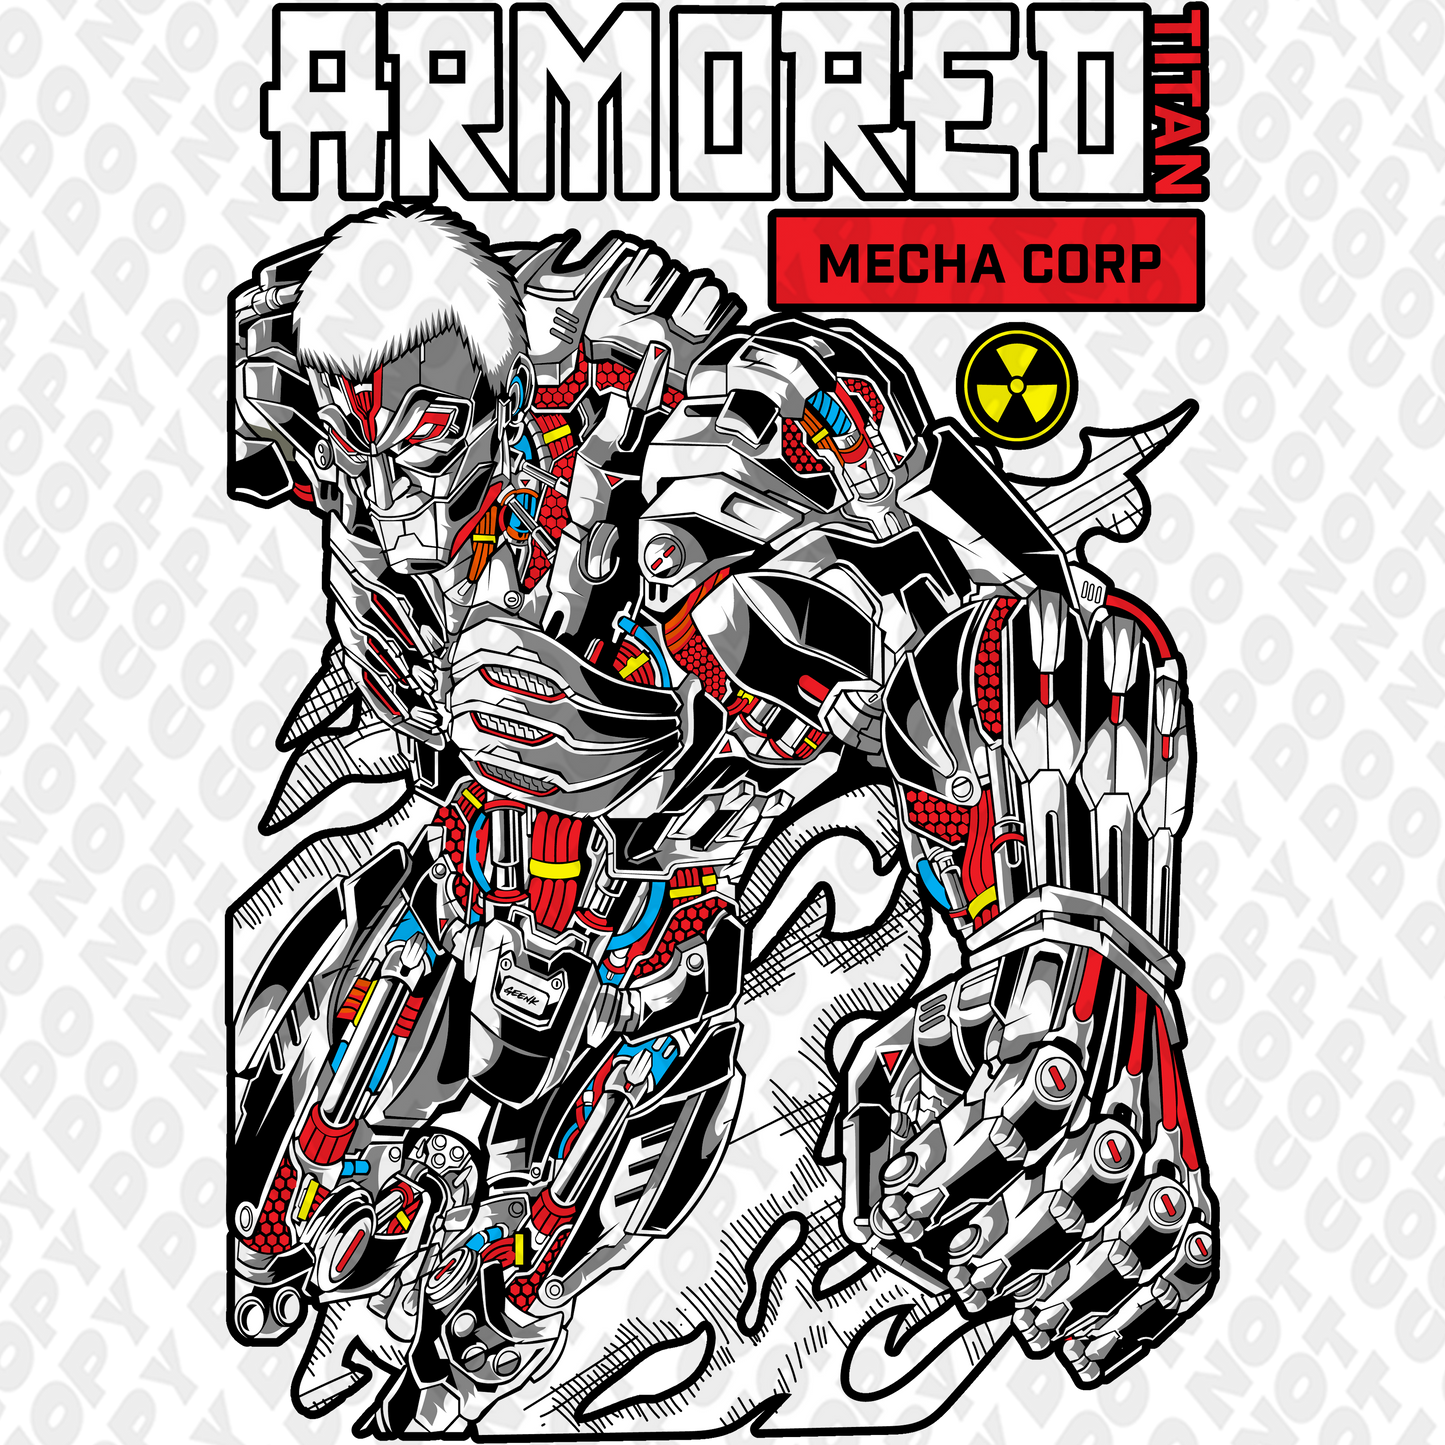 Armored Mecha Corp